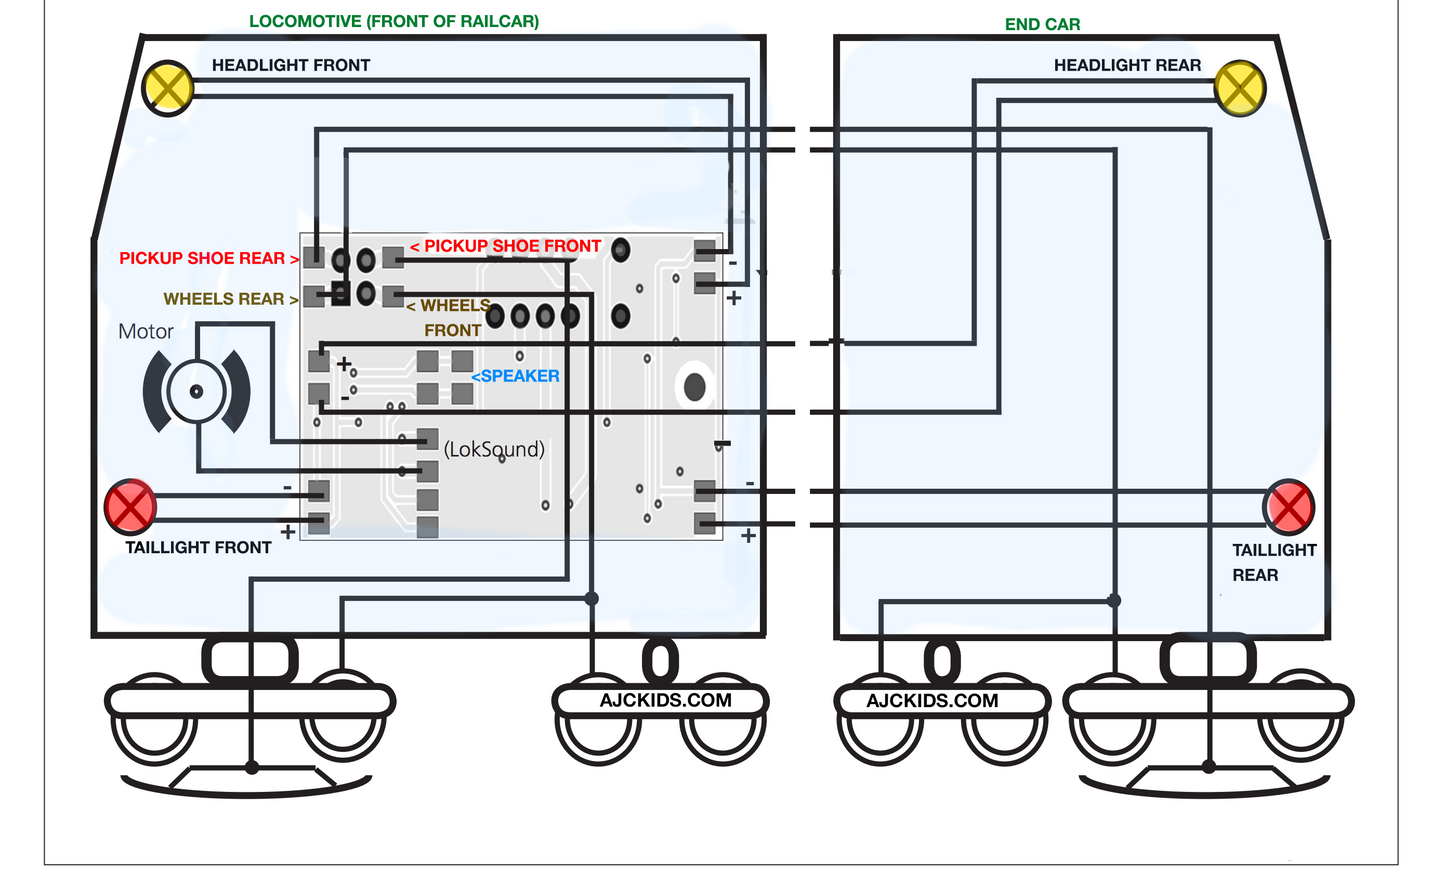 ESU 51966 - Change over of pick-up shoe module wiring diagram